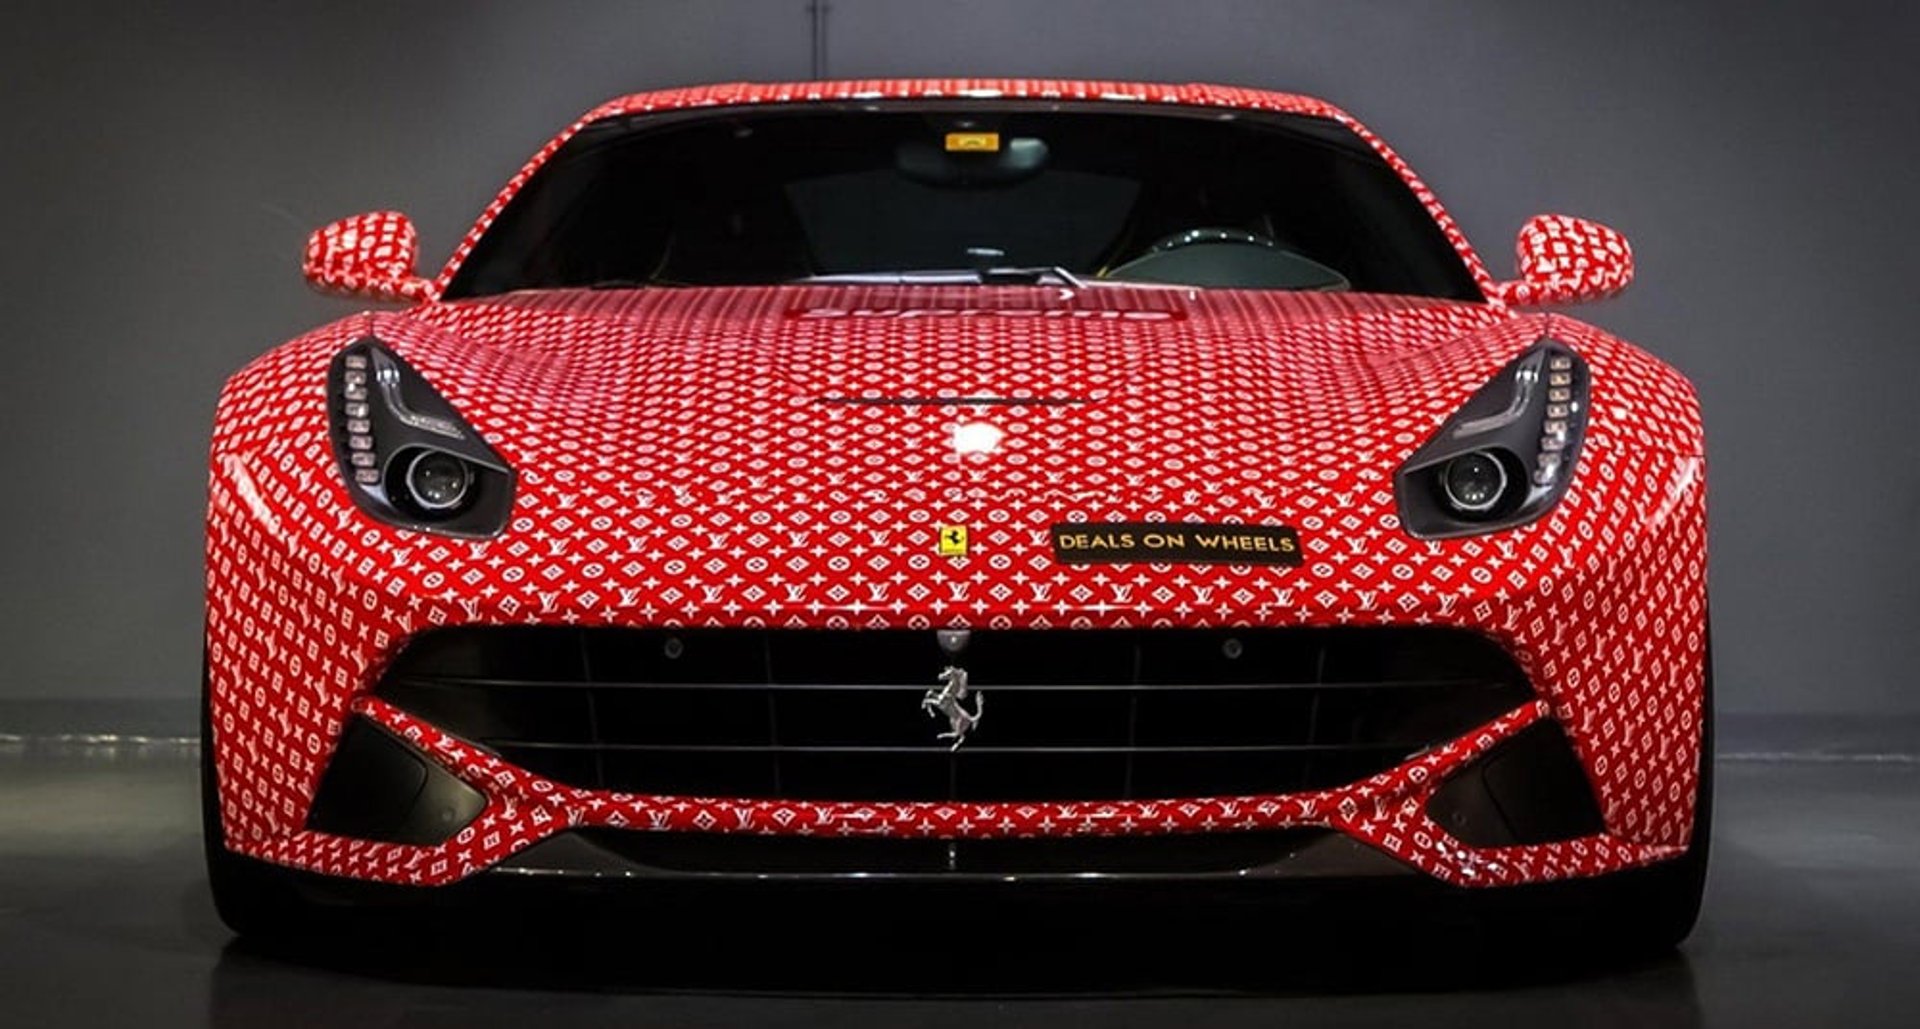 This Ferrari F12 Berlinetta is a Supreme being